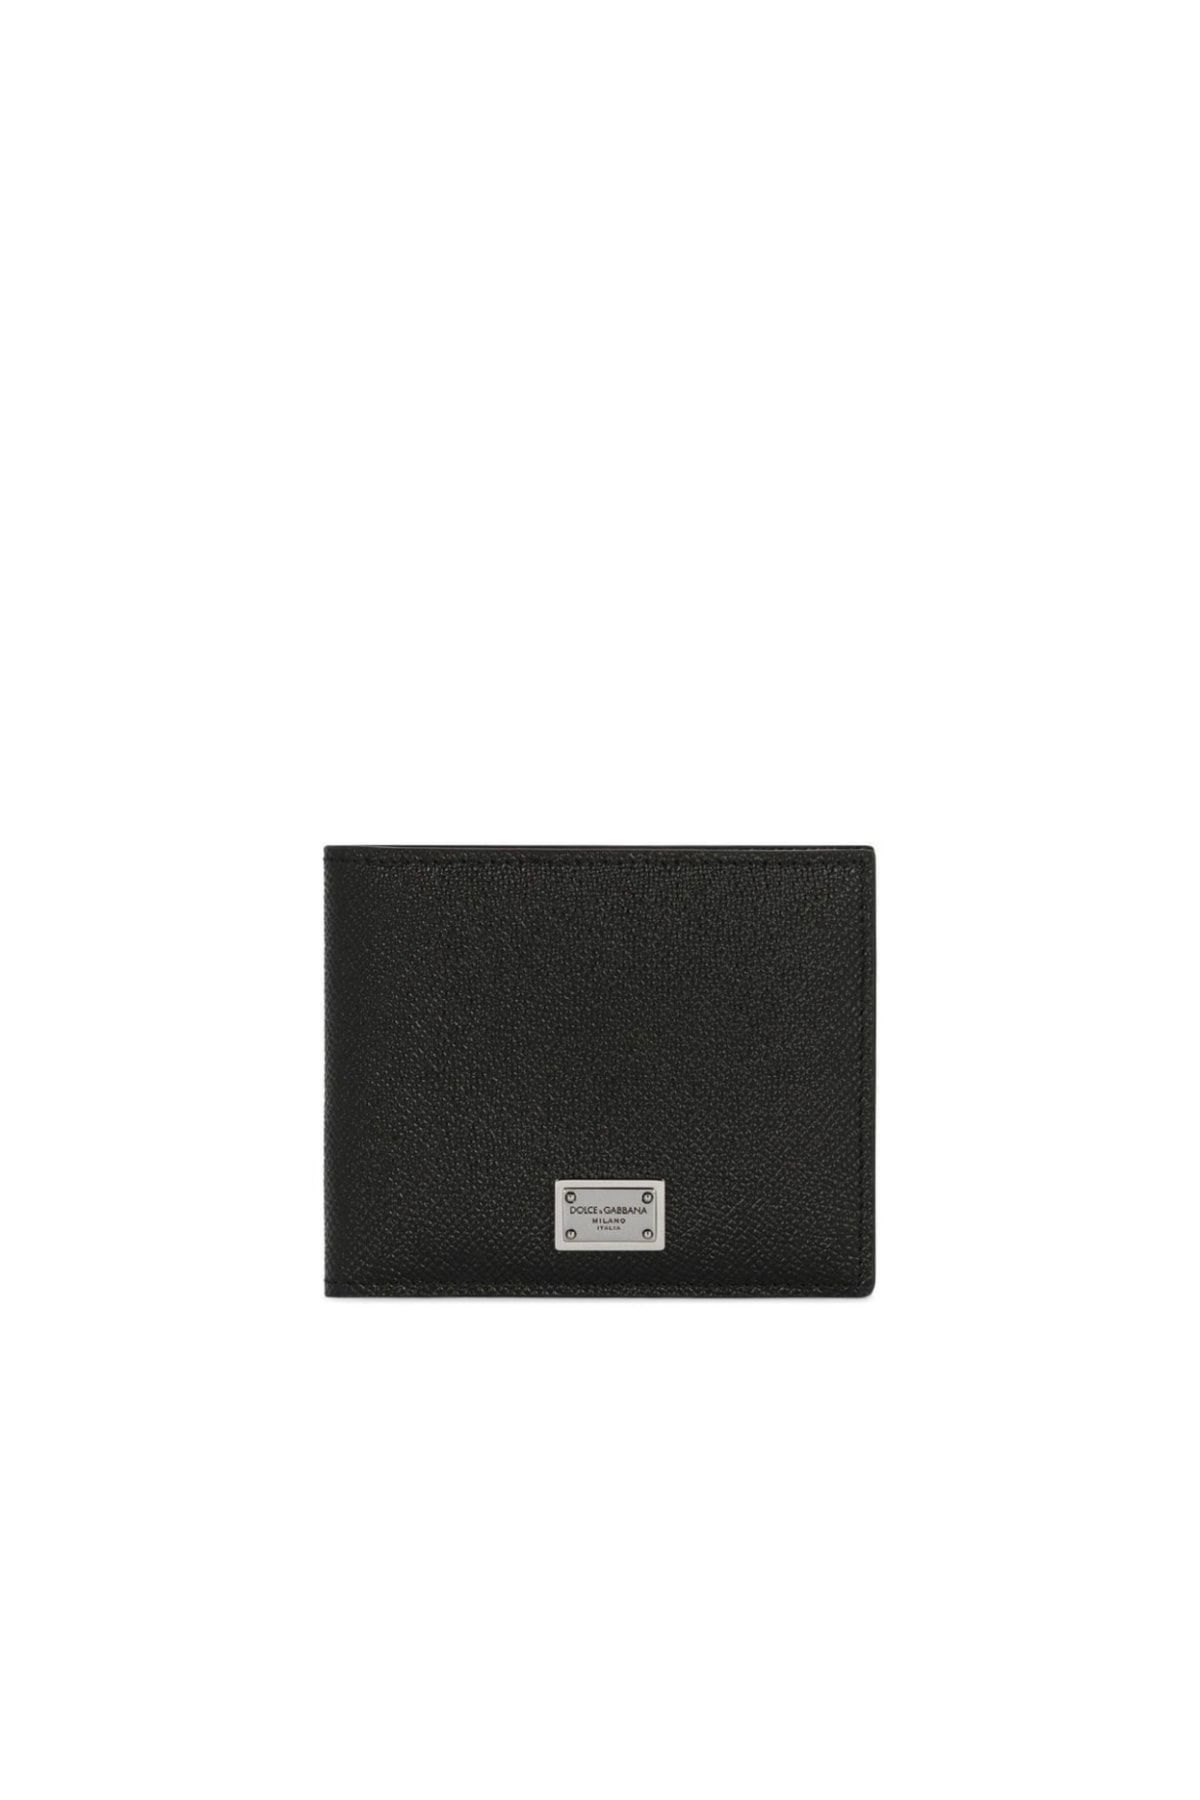 Dolce&Gabbana Bi-fold Learher Wallet